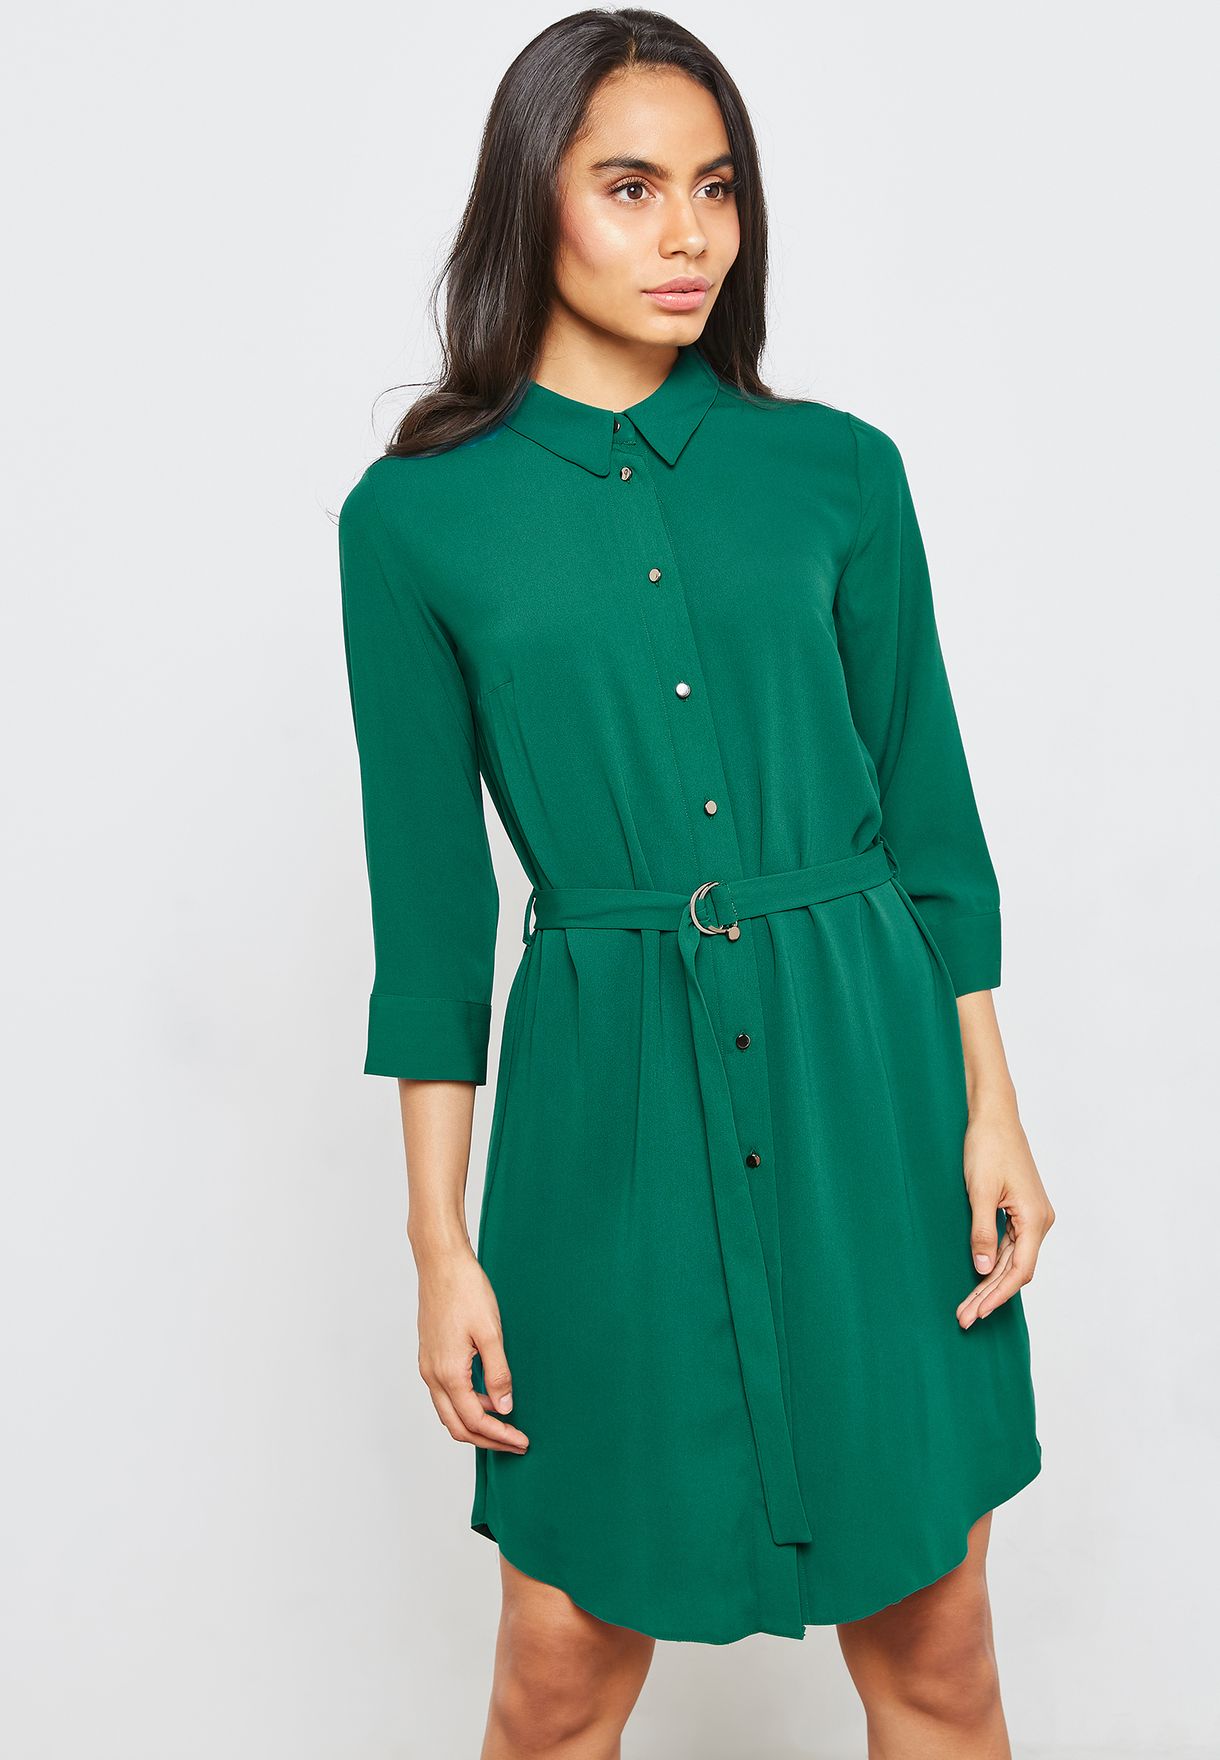 dorothy perkins green shirt dress